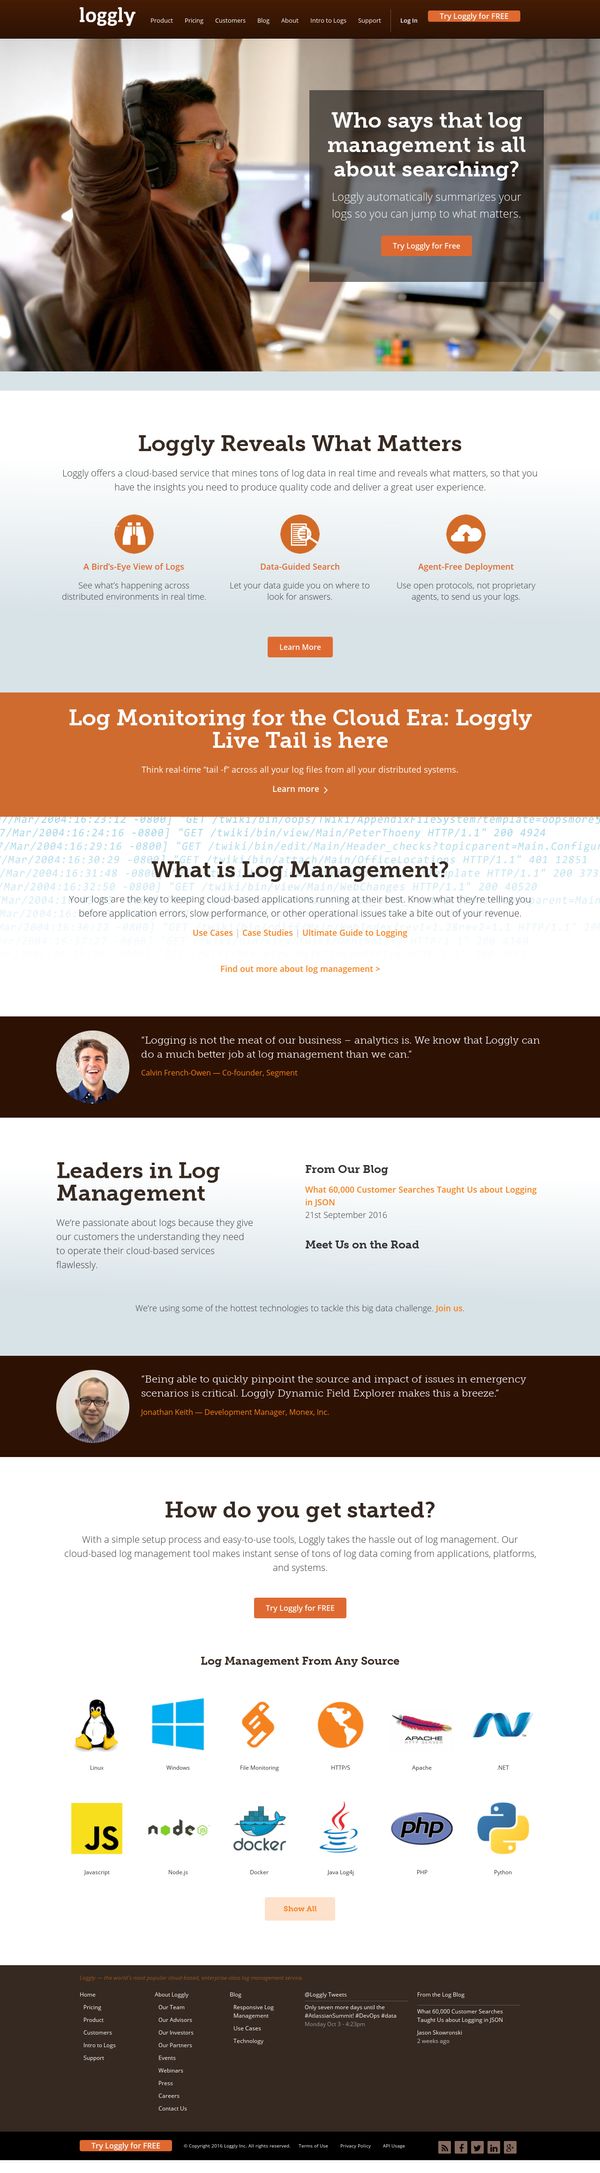 Log Management | Cloud Log Management Service | Loggly